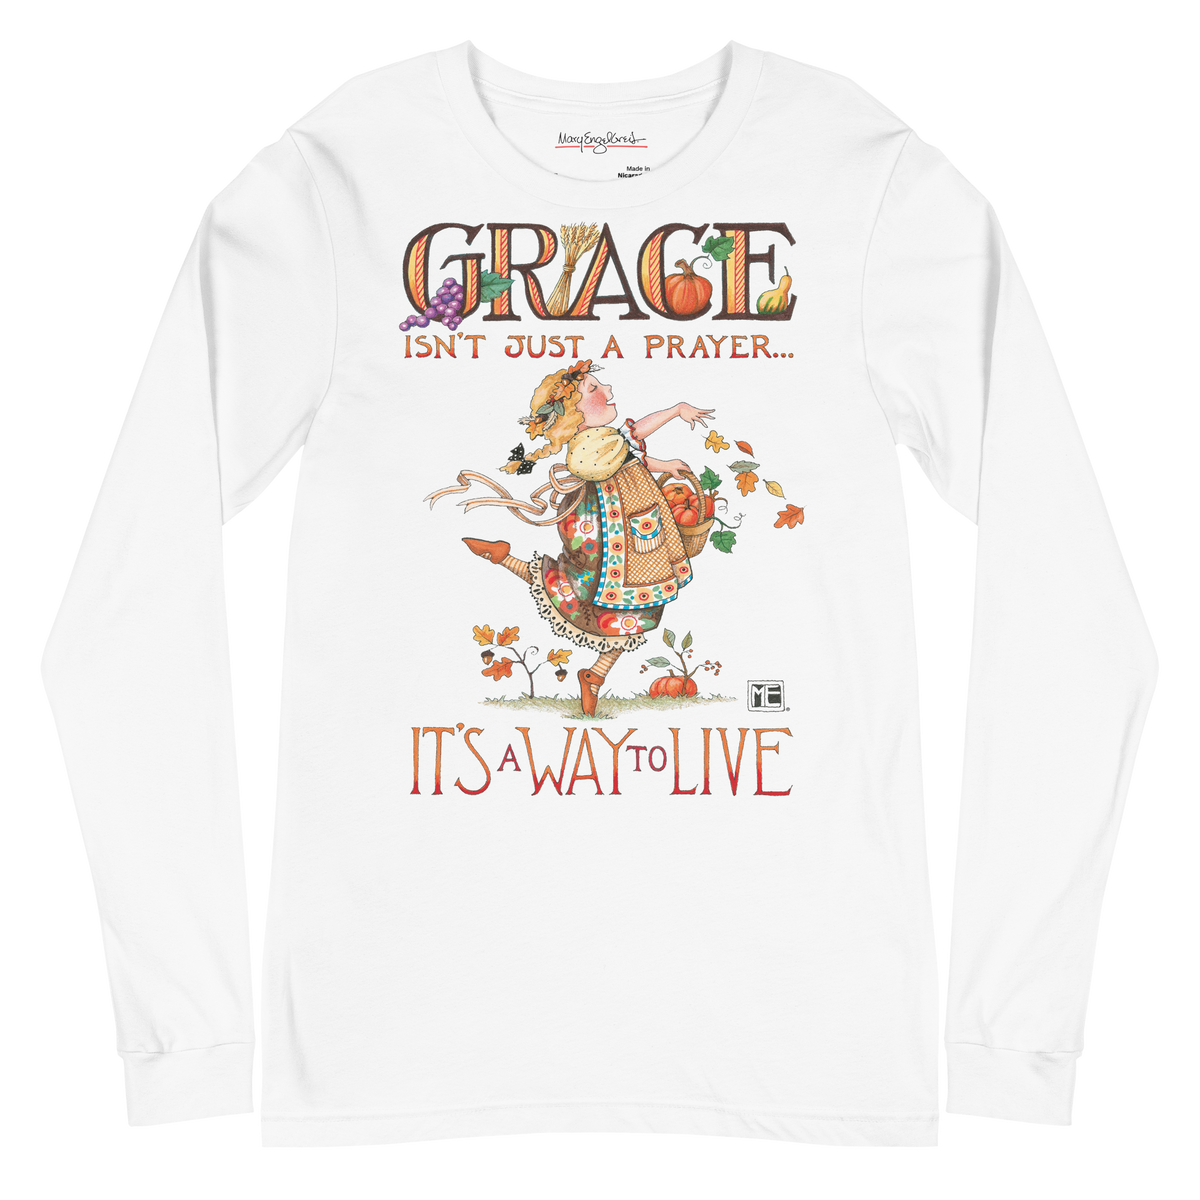 Grace Long Sleeve T-Shirt